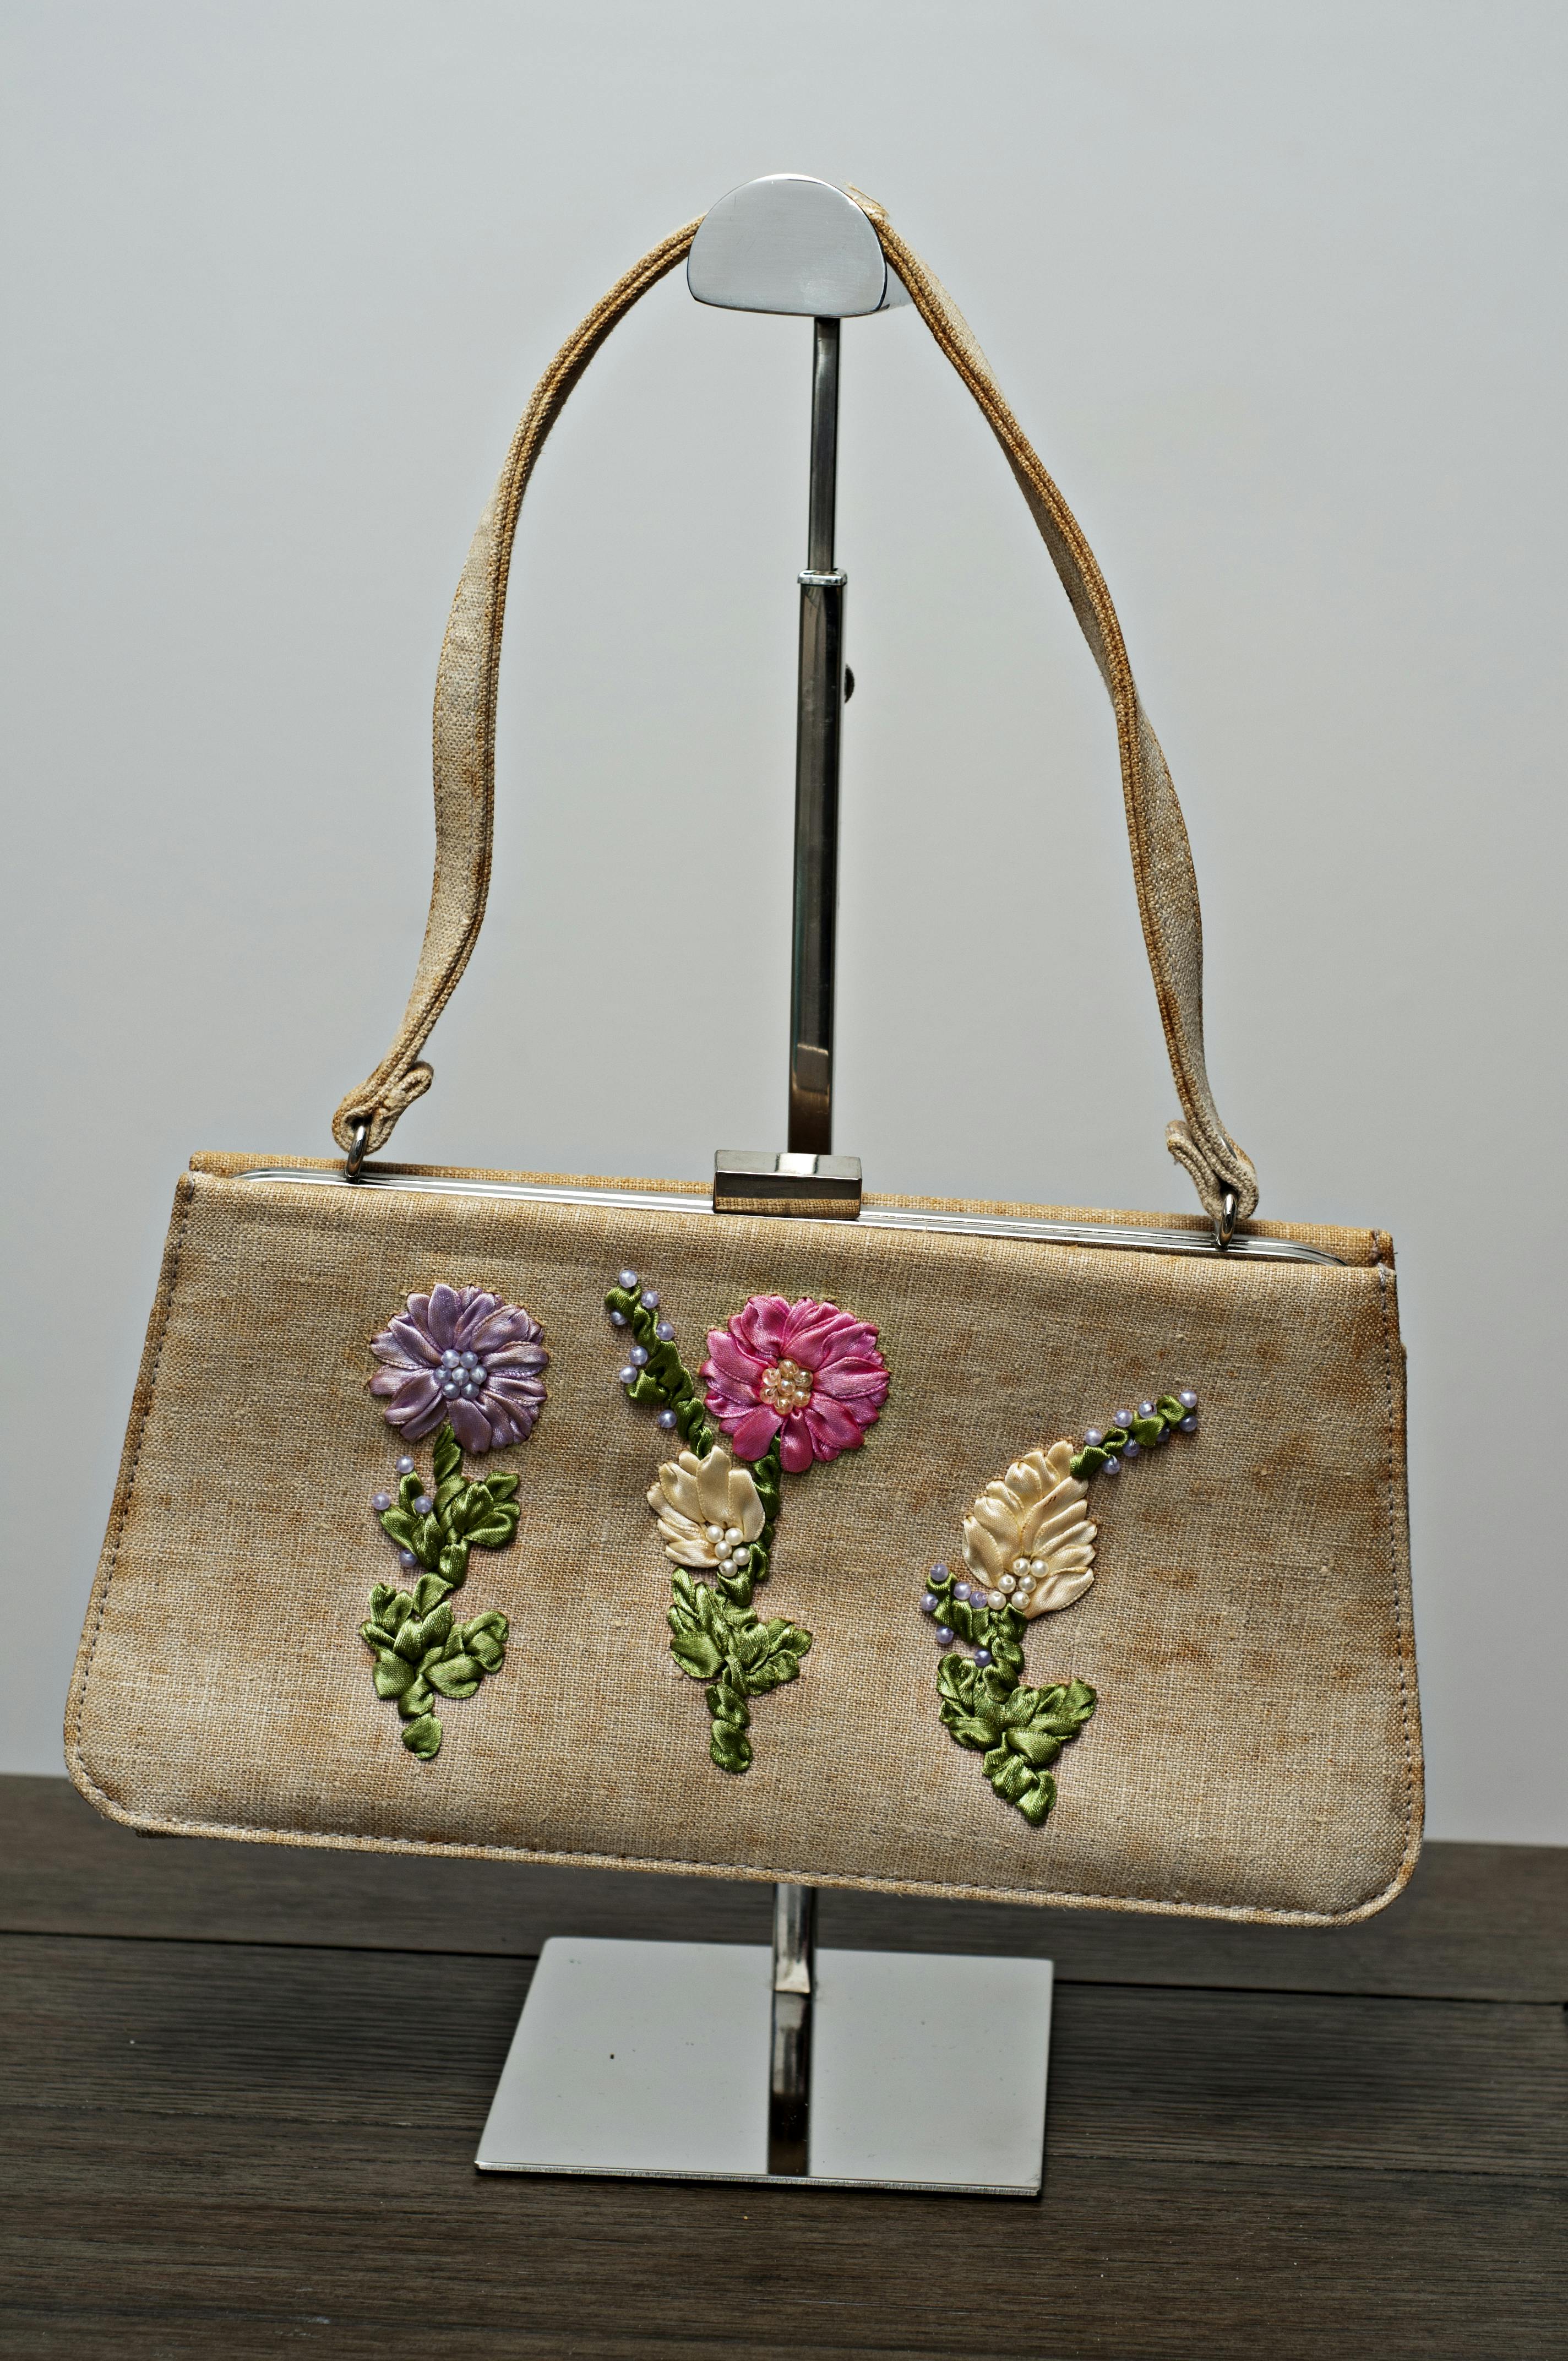 New Women's Handbag Famous Brand Fashion Vintage Shell Bags